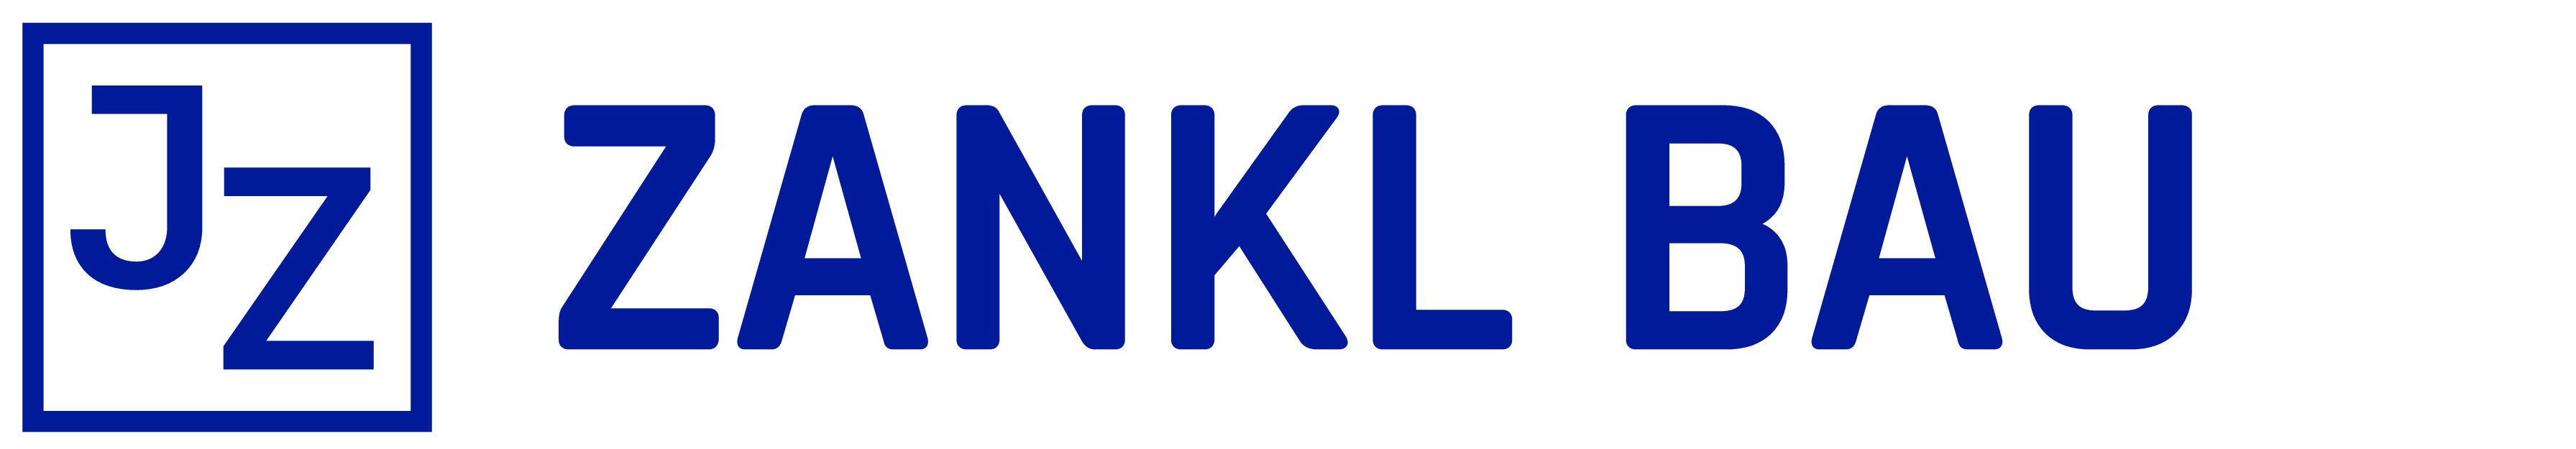 Josef Zankl GmbH - Logo